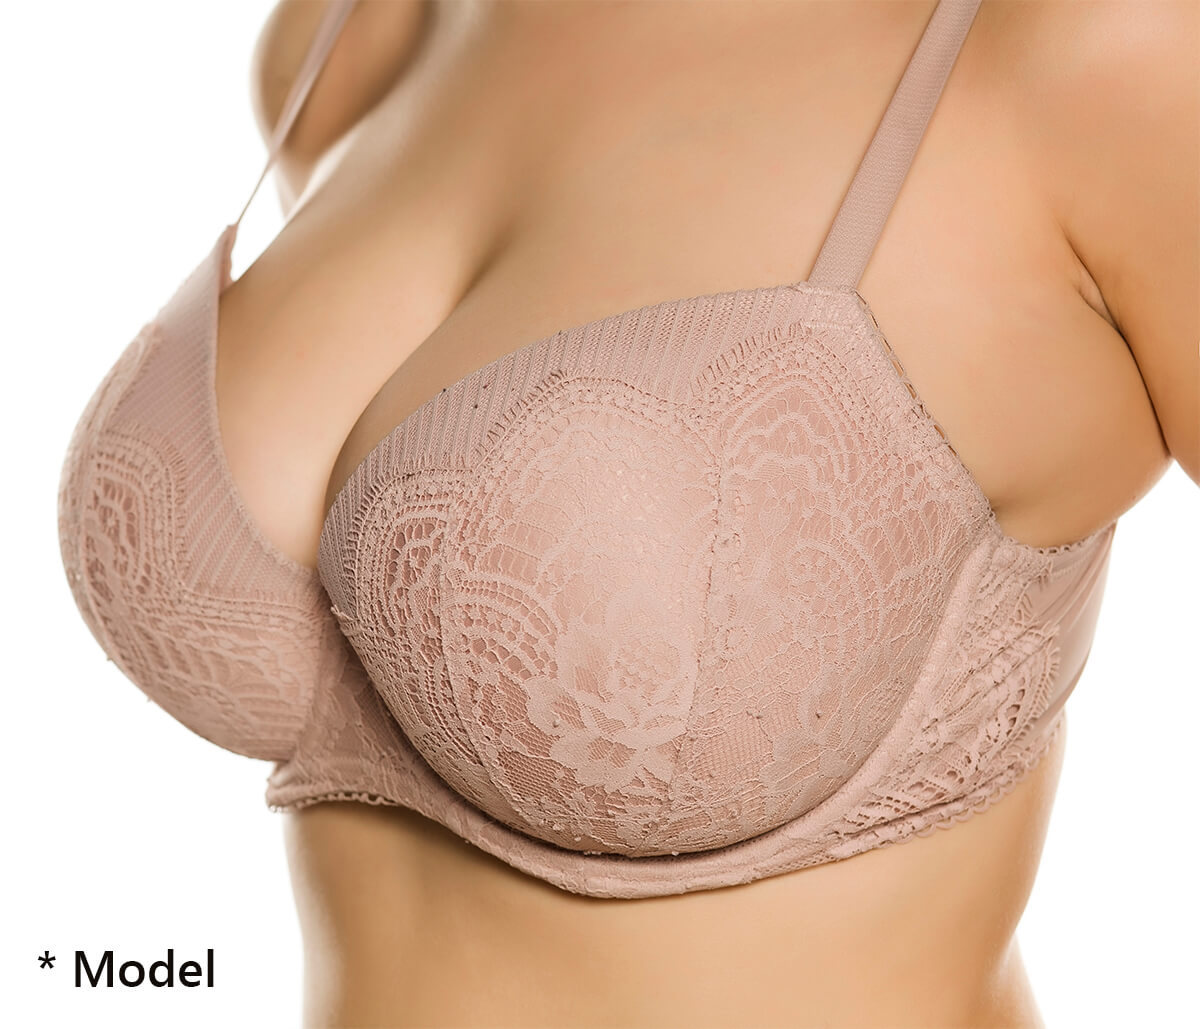 Breast augmentation / Breast reduction / Lipofilling